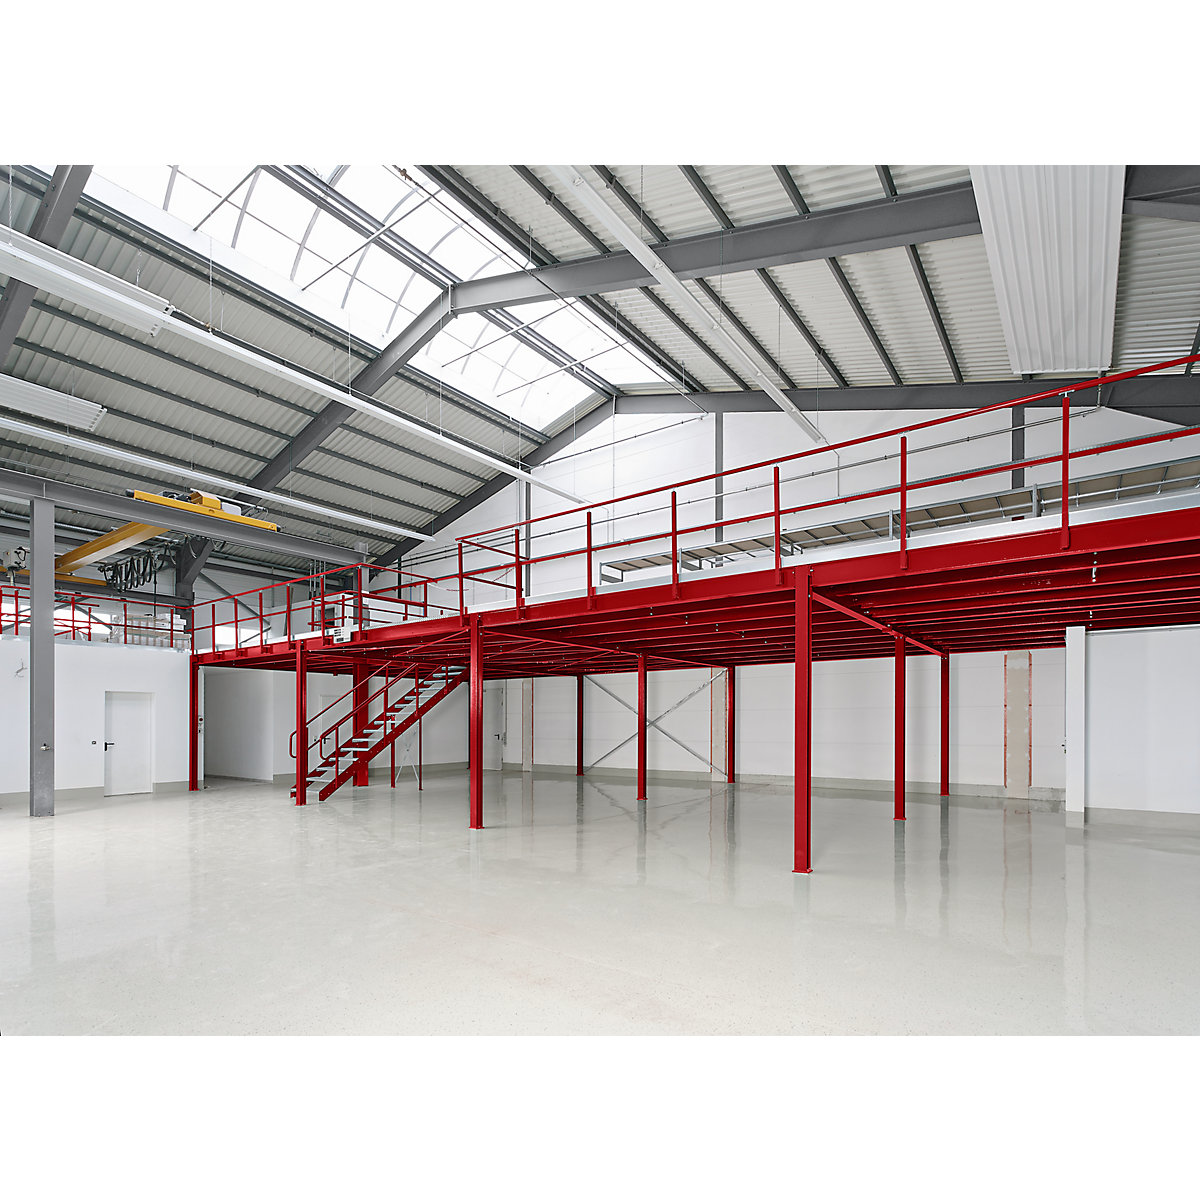 Bouwplatform, aanbouwstelling, oppervlaktebelasting 350 kg/m², steunraster 5000 x 5000 mm